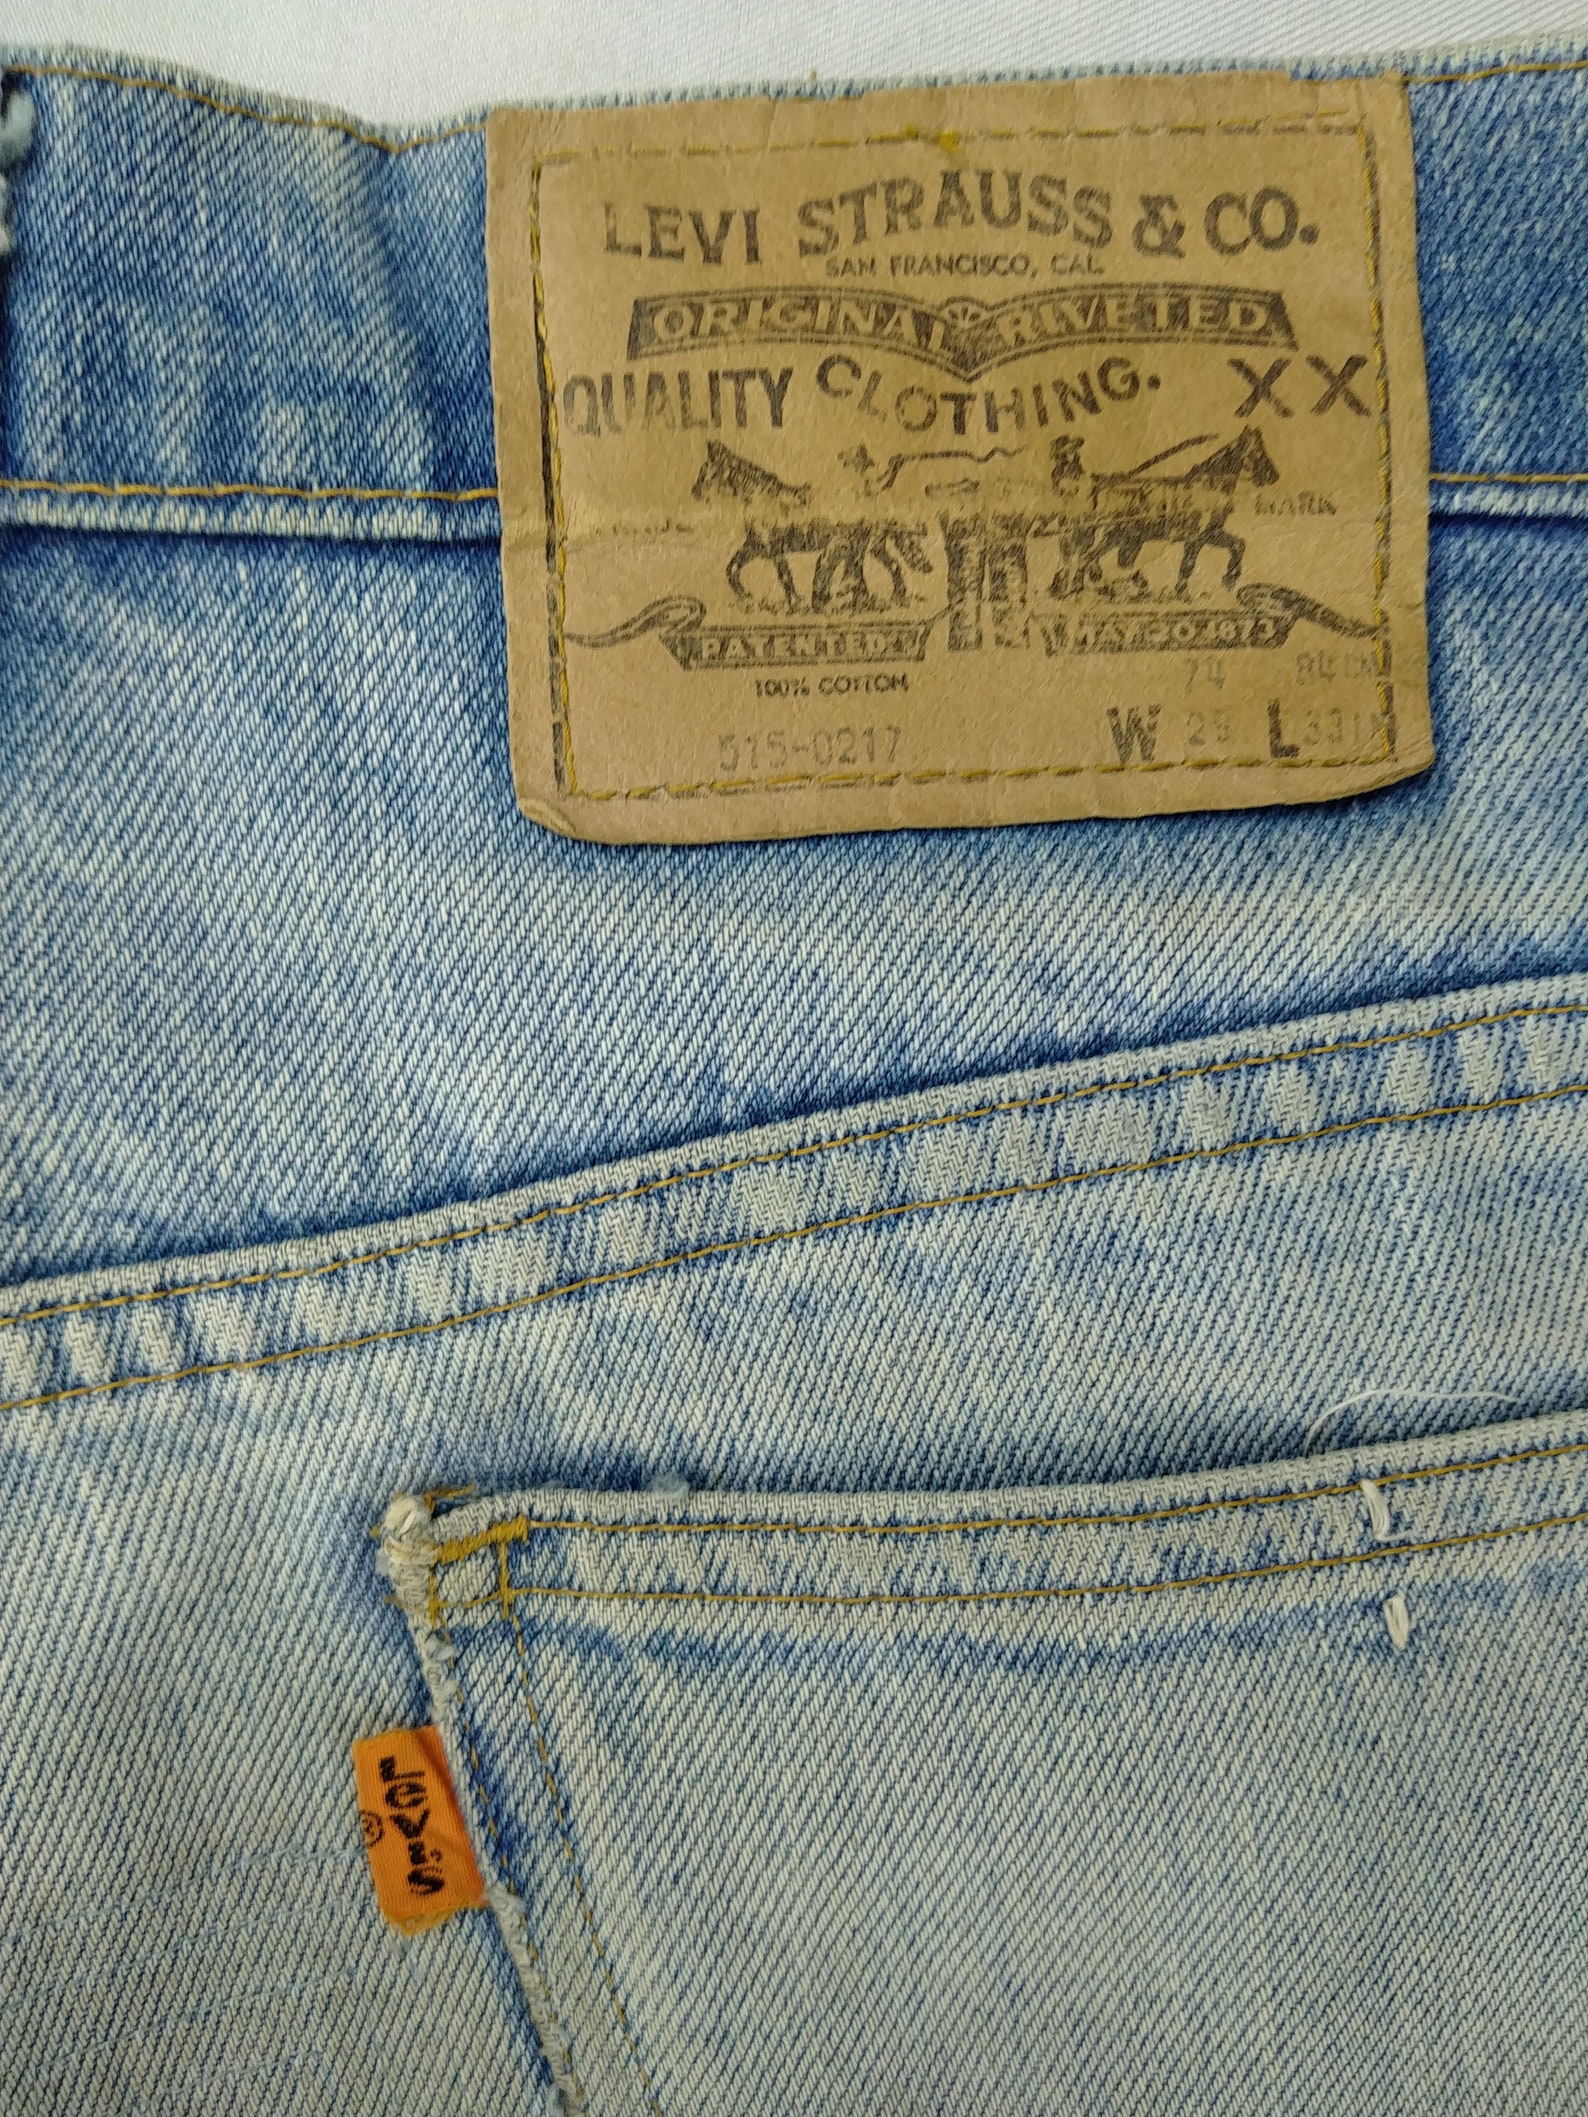 Vintage Levi's 515 Orange Tab Jeans 28x28 Light Wash Denim | Etsy